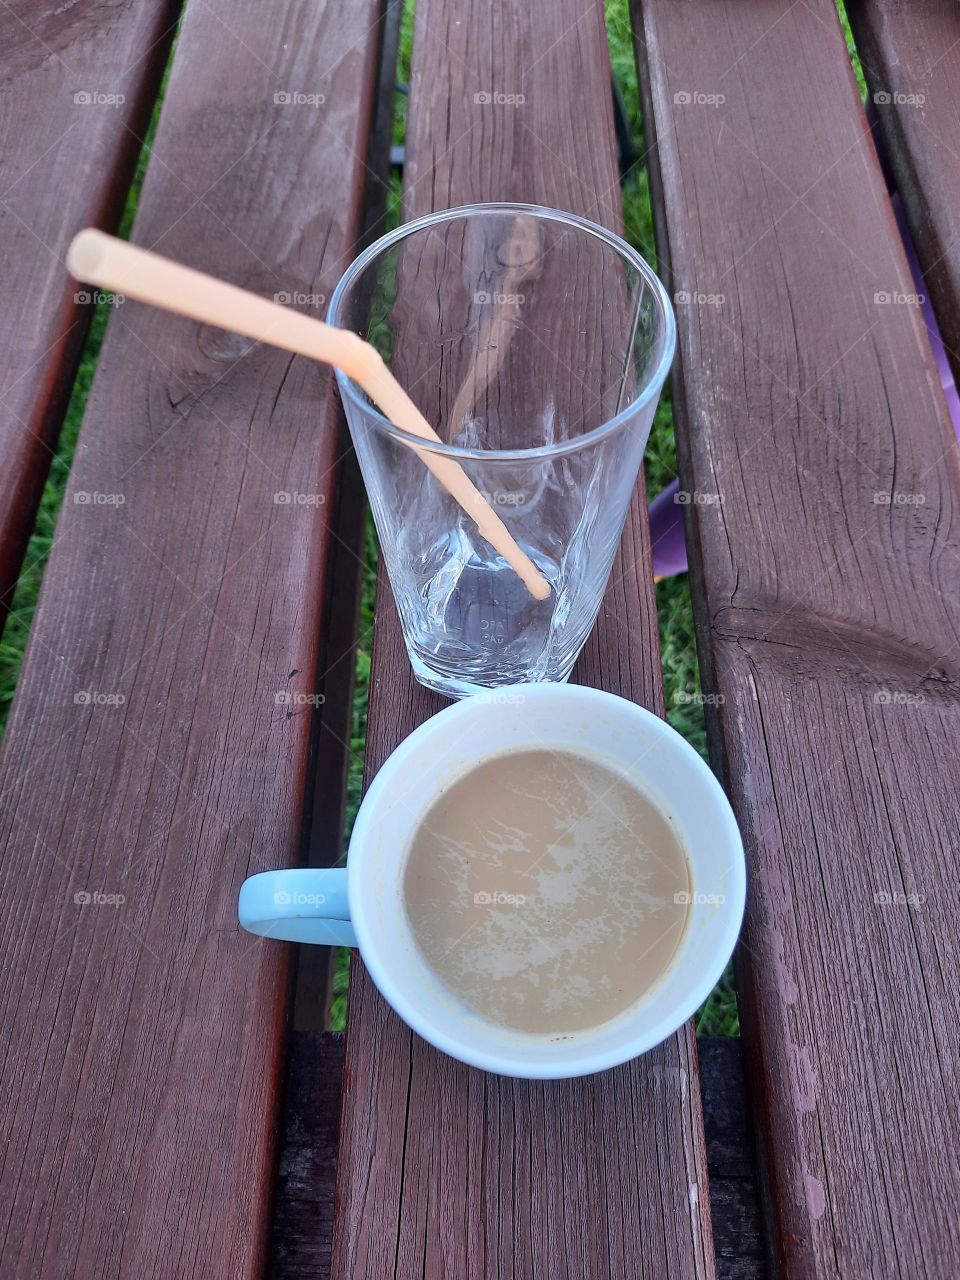 coffee  mug and glass on wooden table